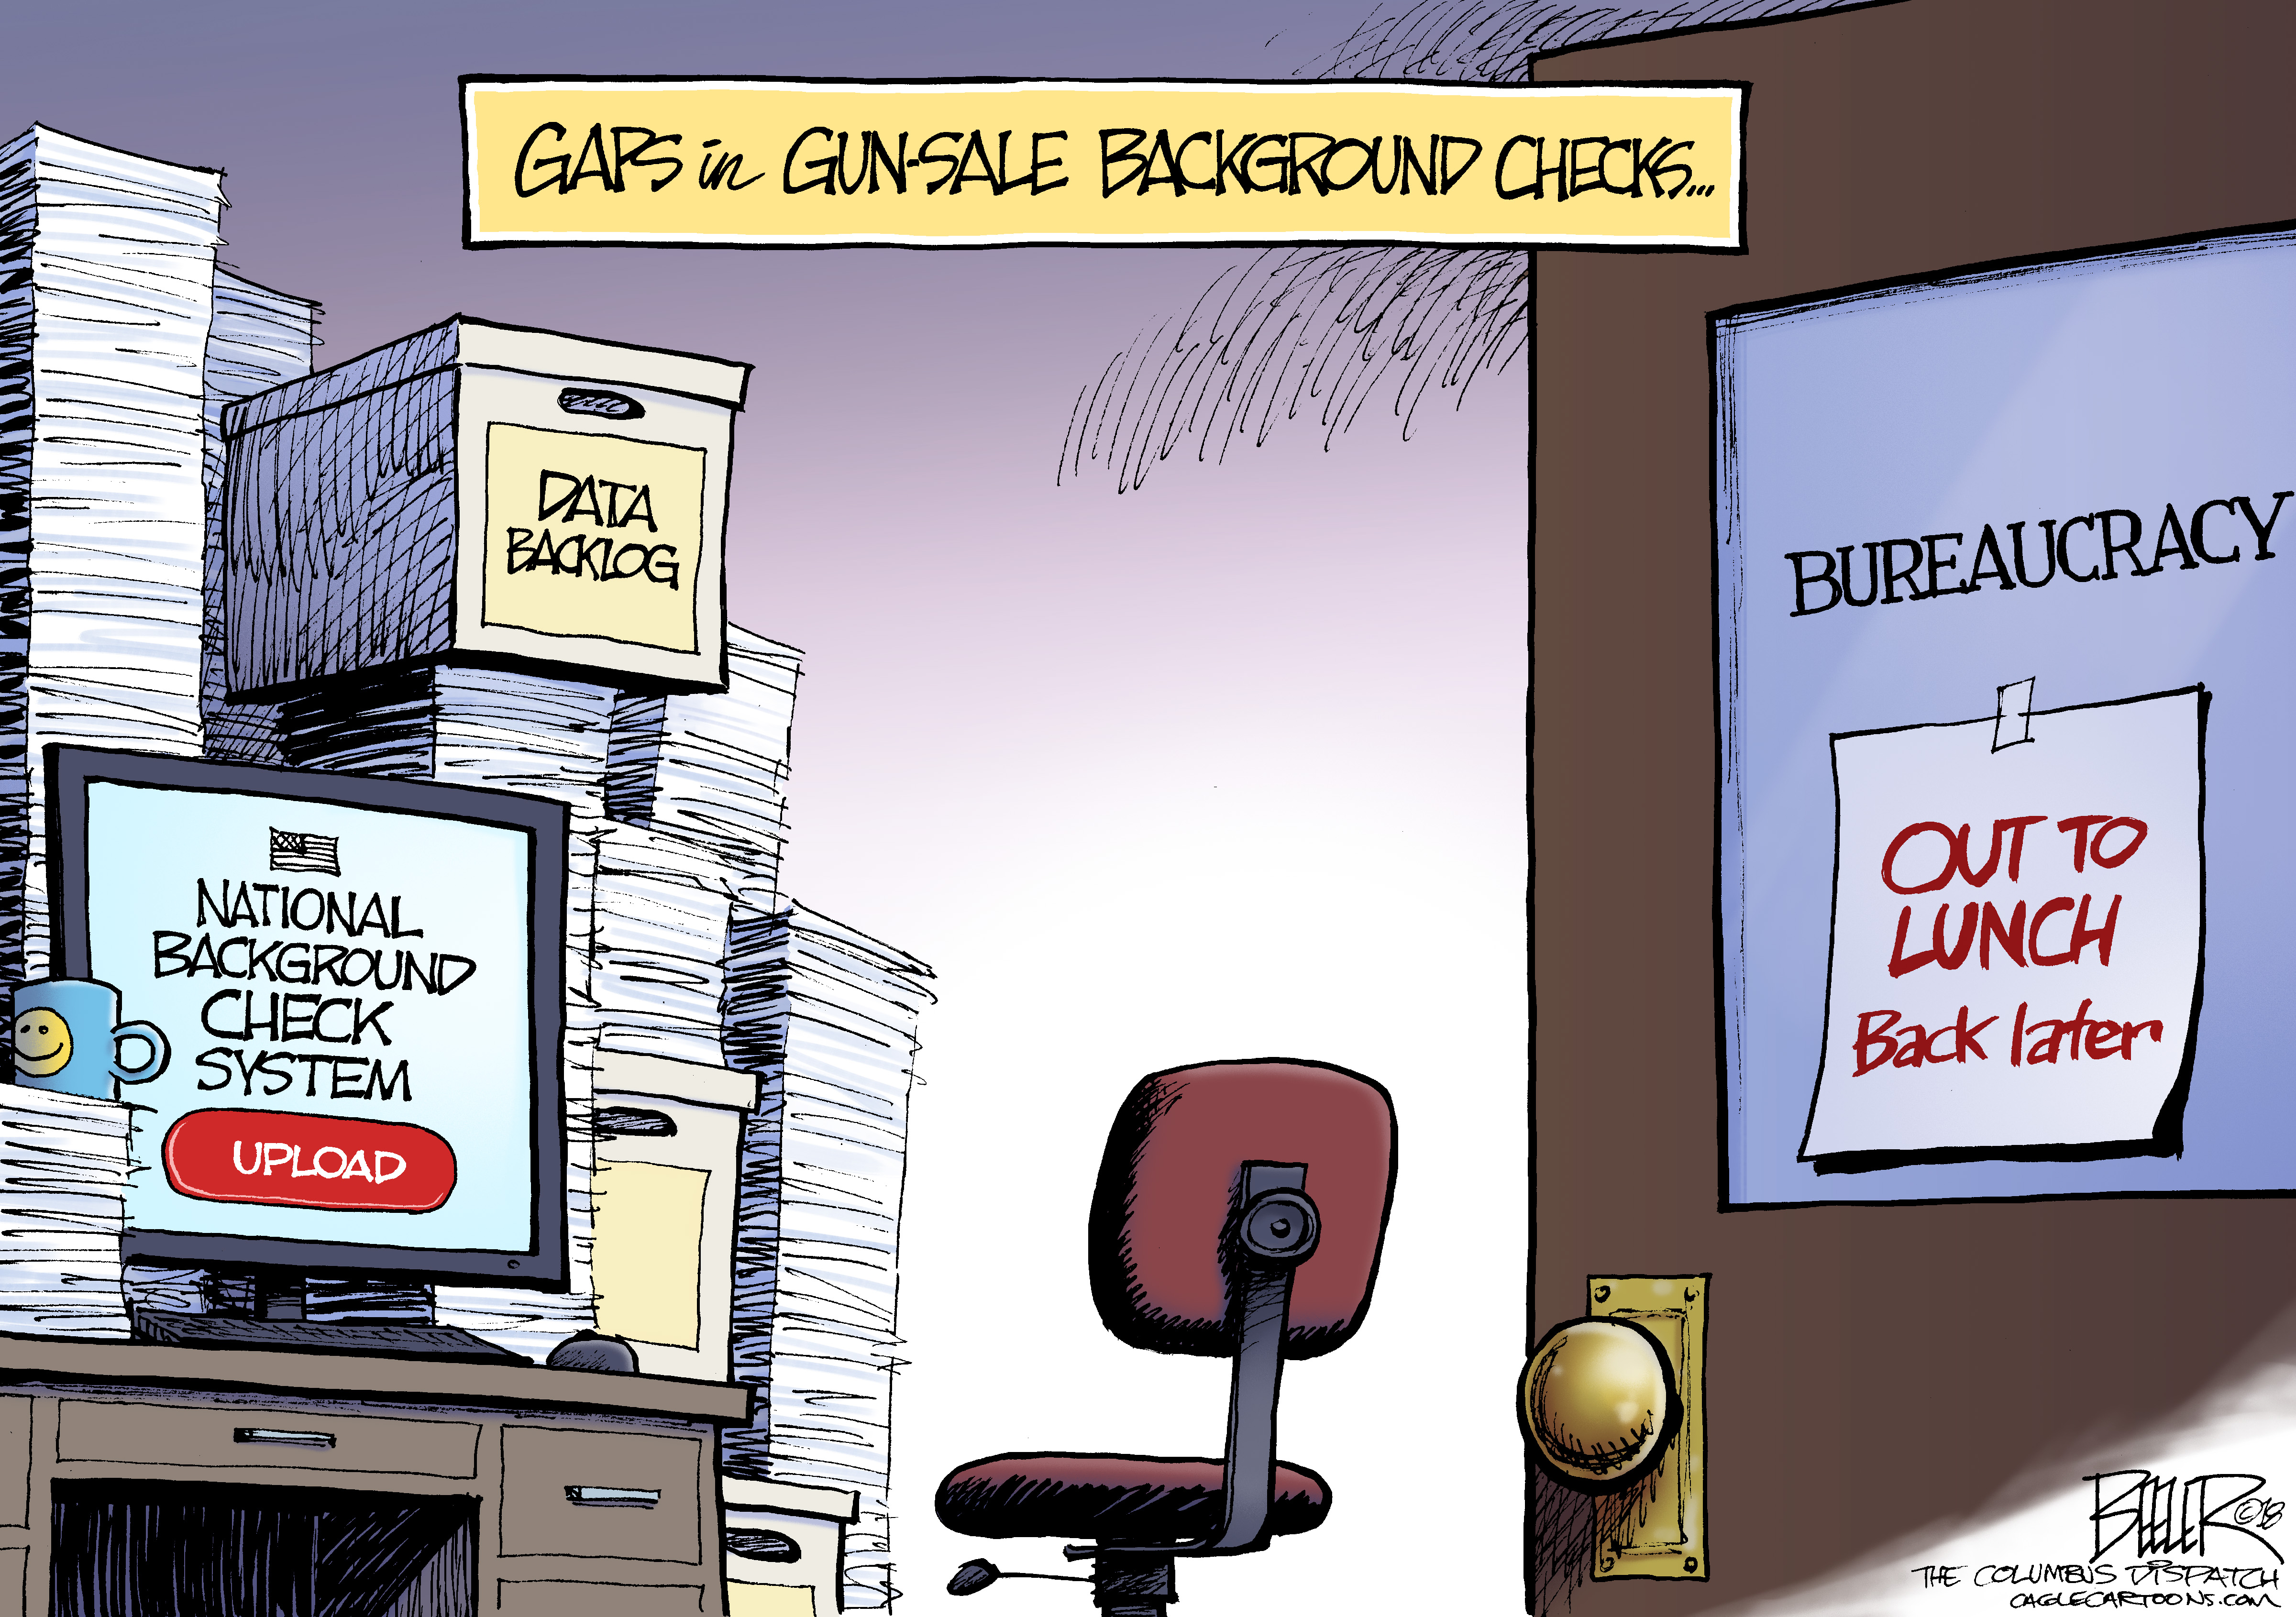 federal bureaucracy cartoon